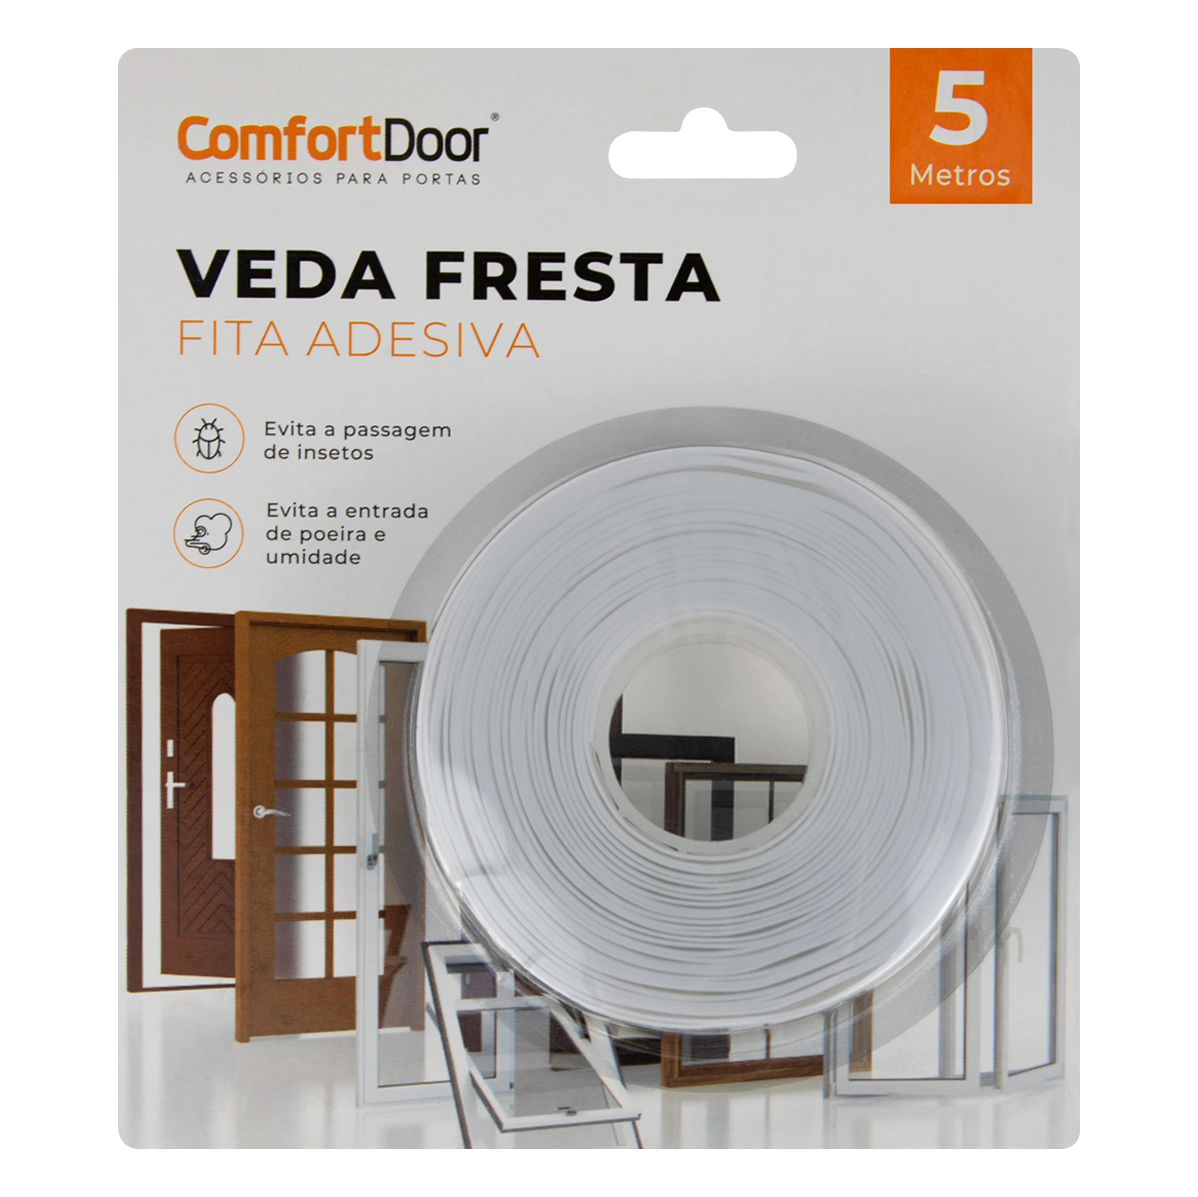 Veda Fresta Fita Adesiva Protetor Porta Janela Vedação Comfort Door 5 Metros Transparente - 2